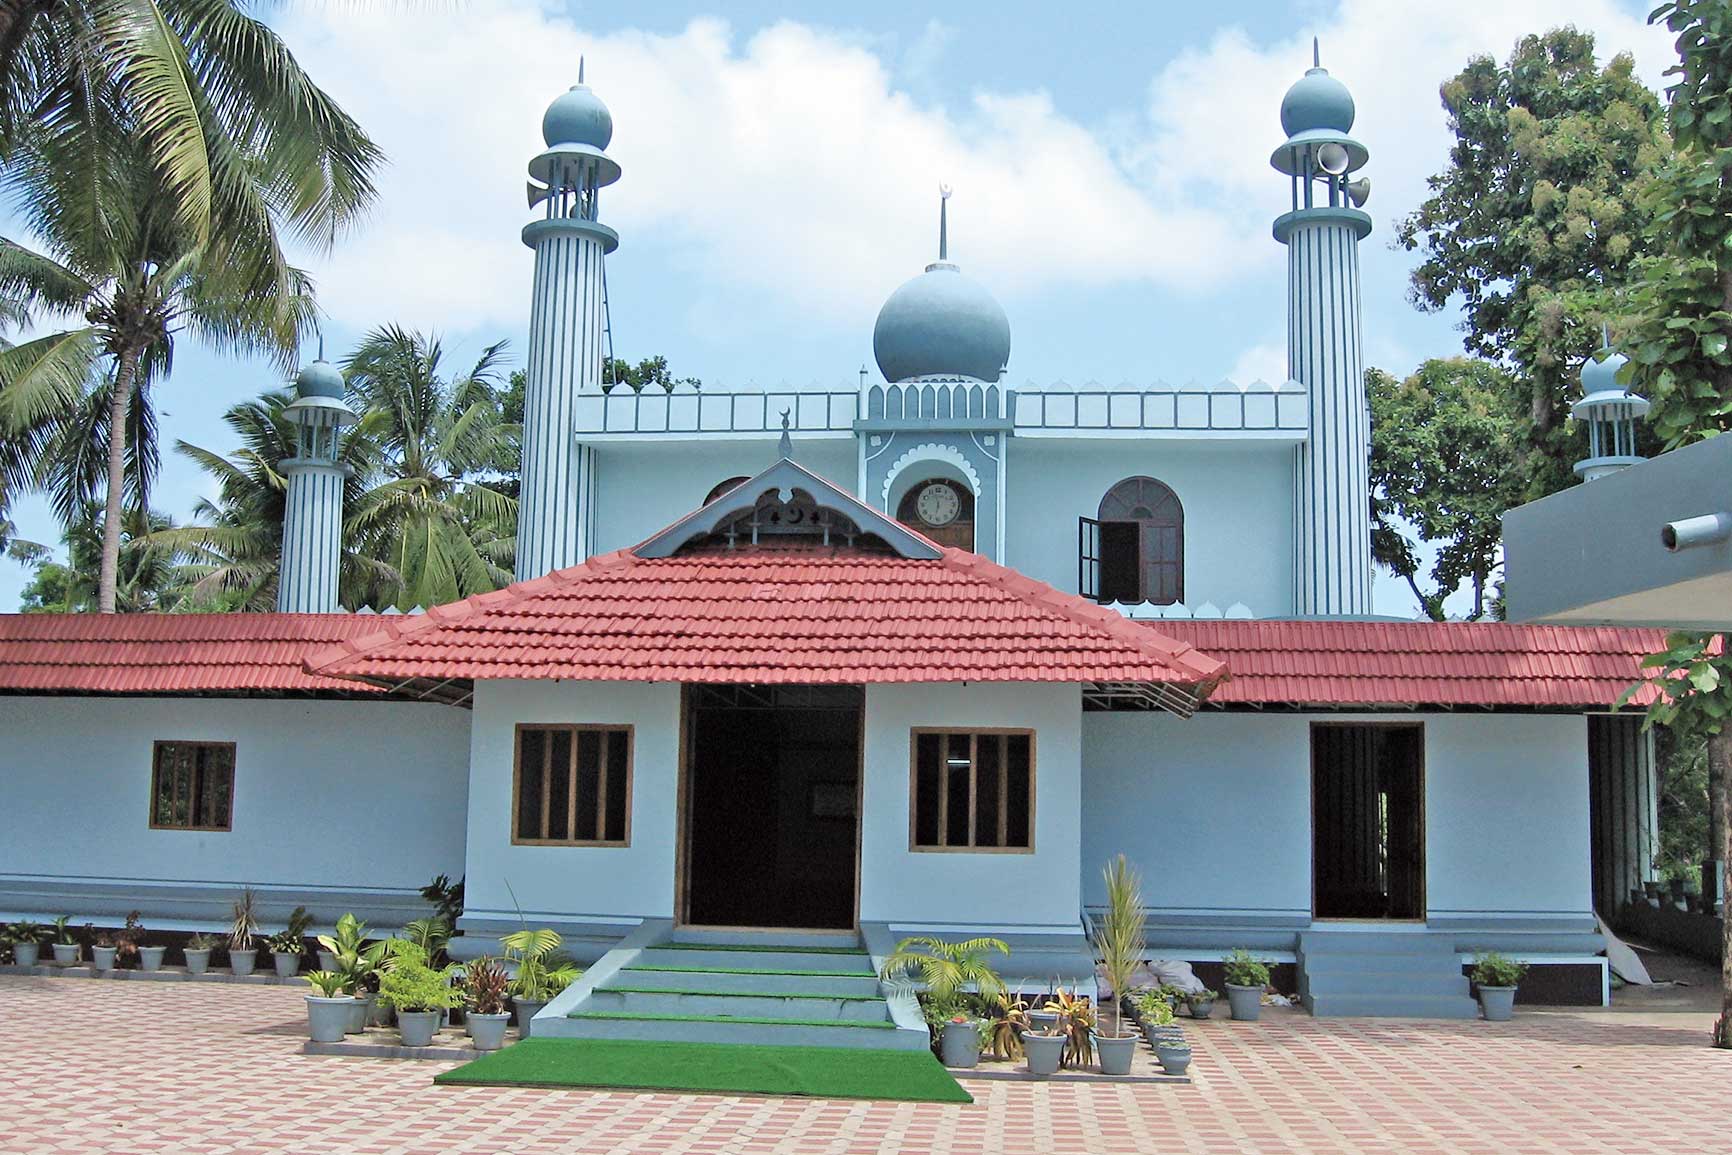 The Cheraman Masjid